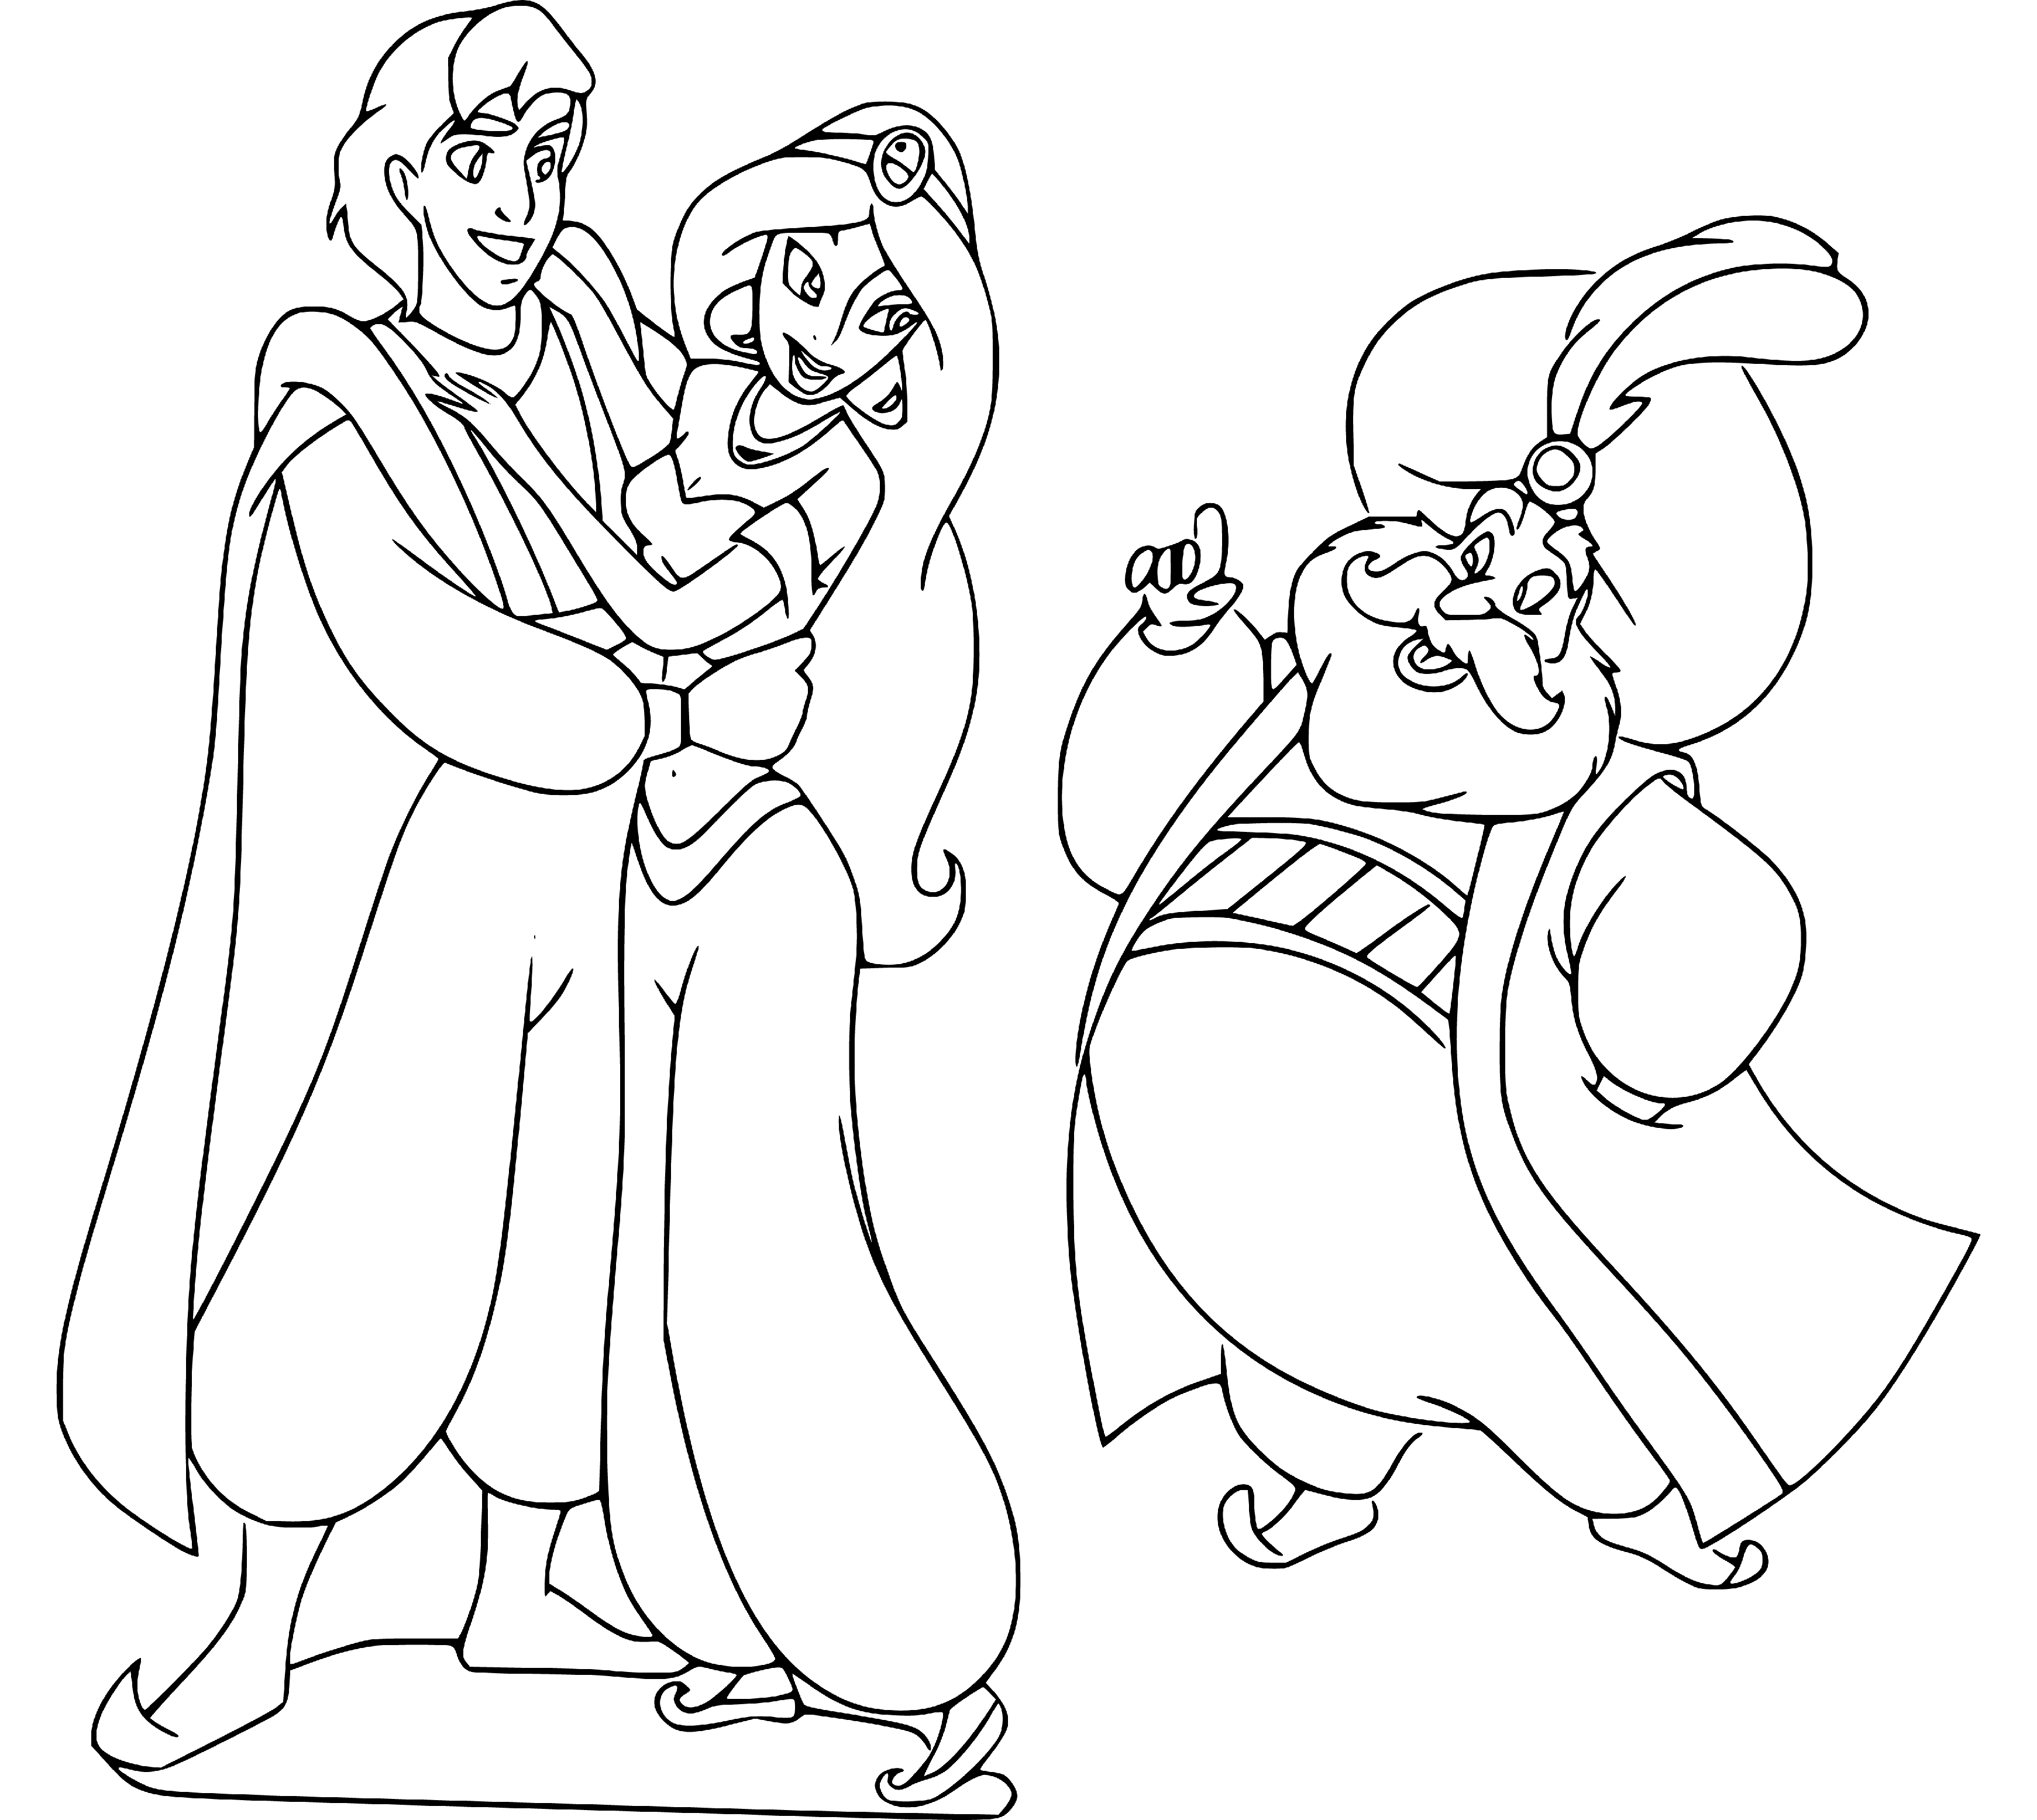 Aladdin, Jasmine and Sultan Coloring Page for Kids - SheetalColor.com